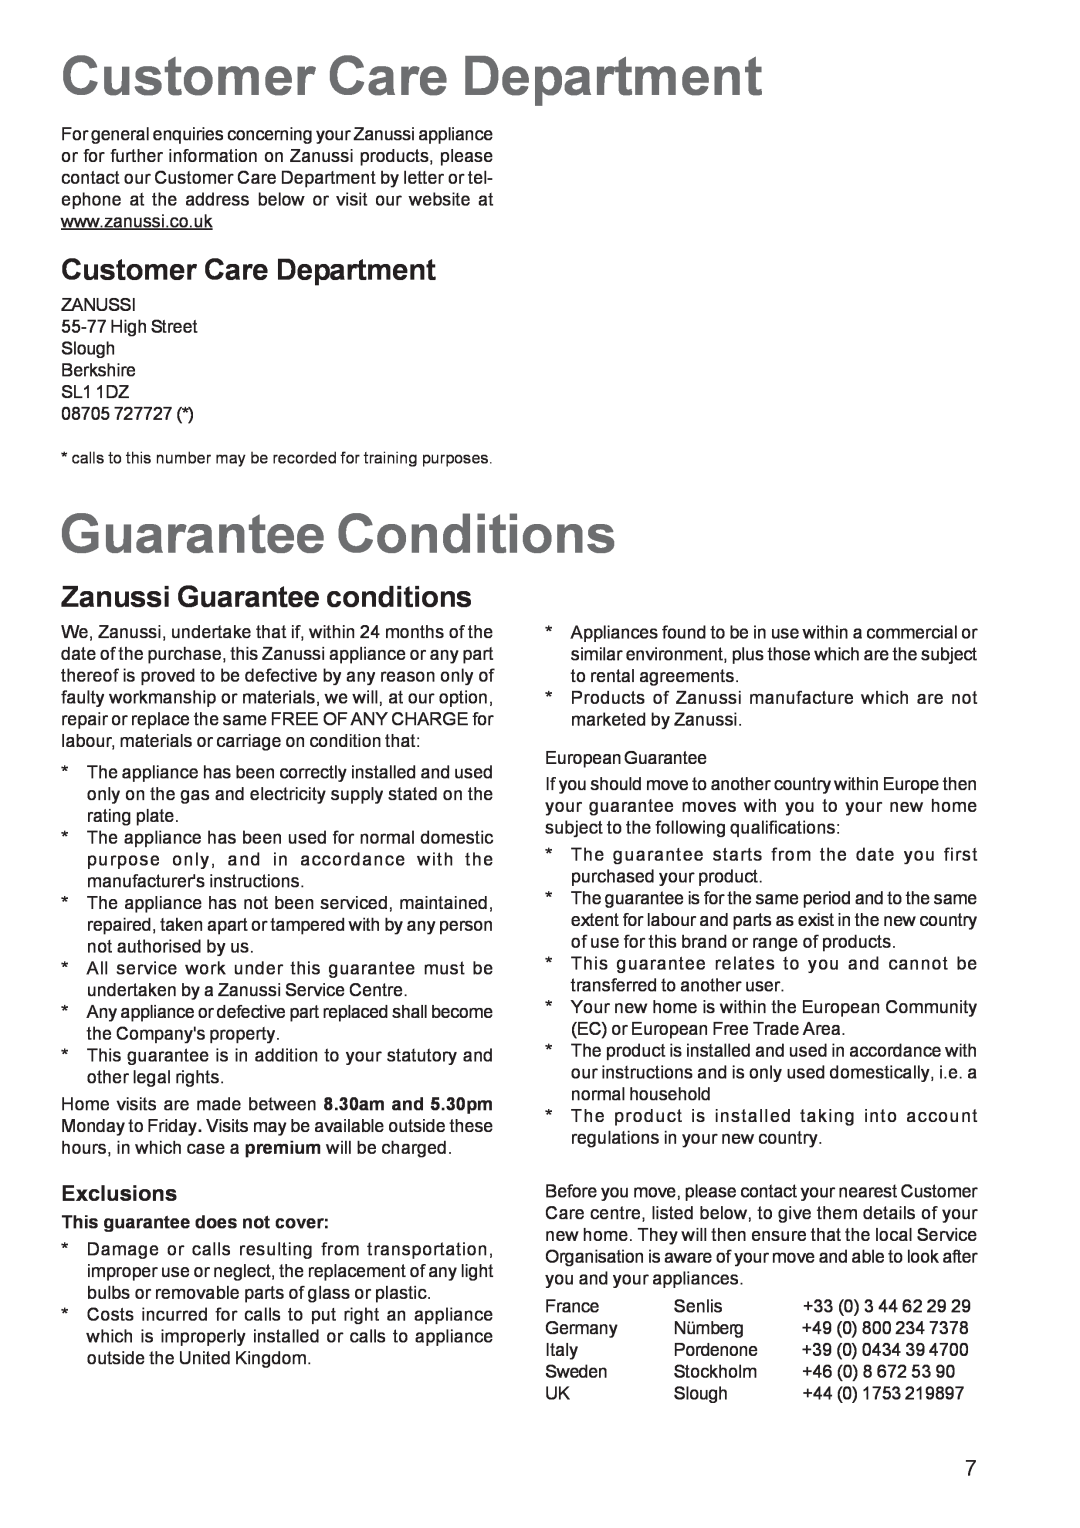 Zanussi ZGF 982 manual Customer Care Department, Guarantee Conditions, Zanussi Guarantee conditions, Exclusions 